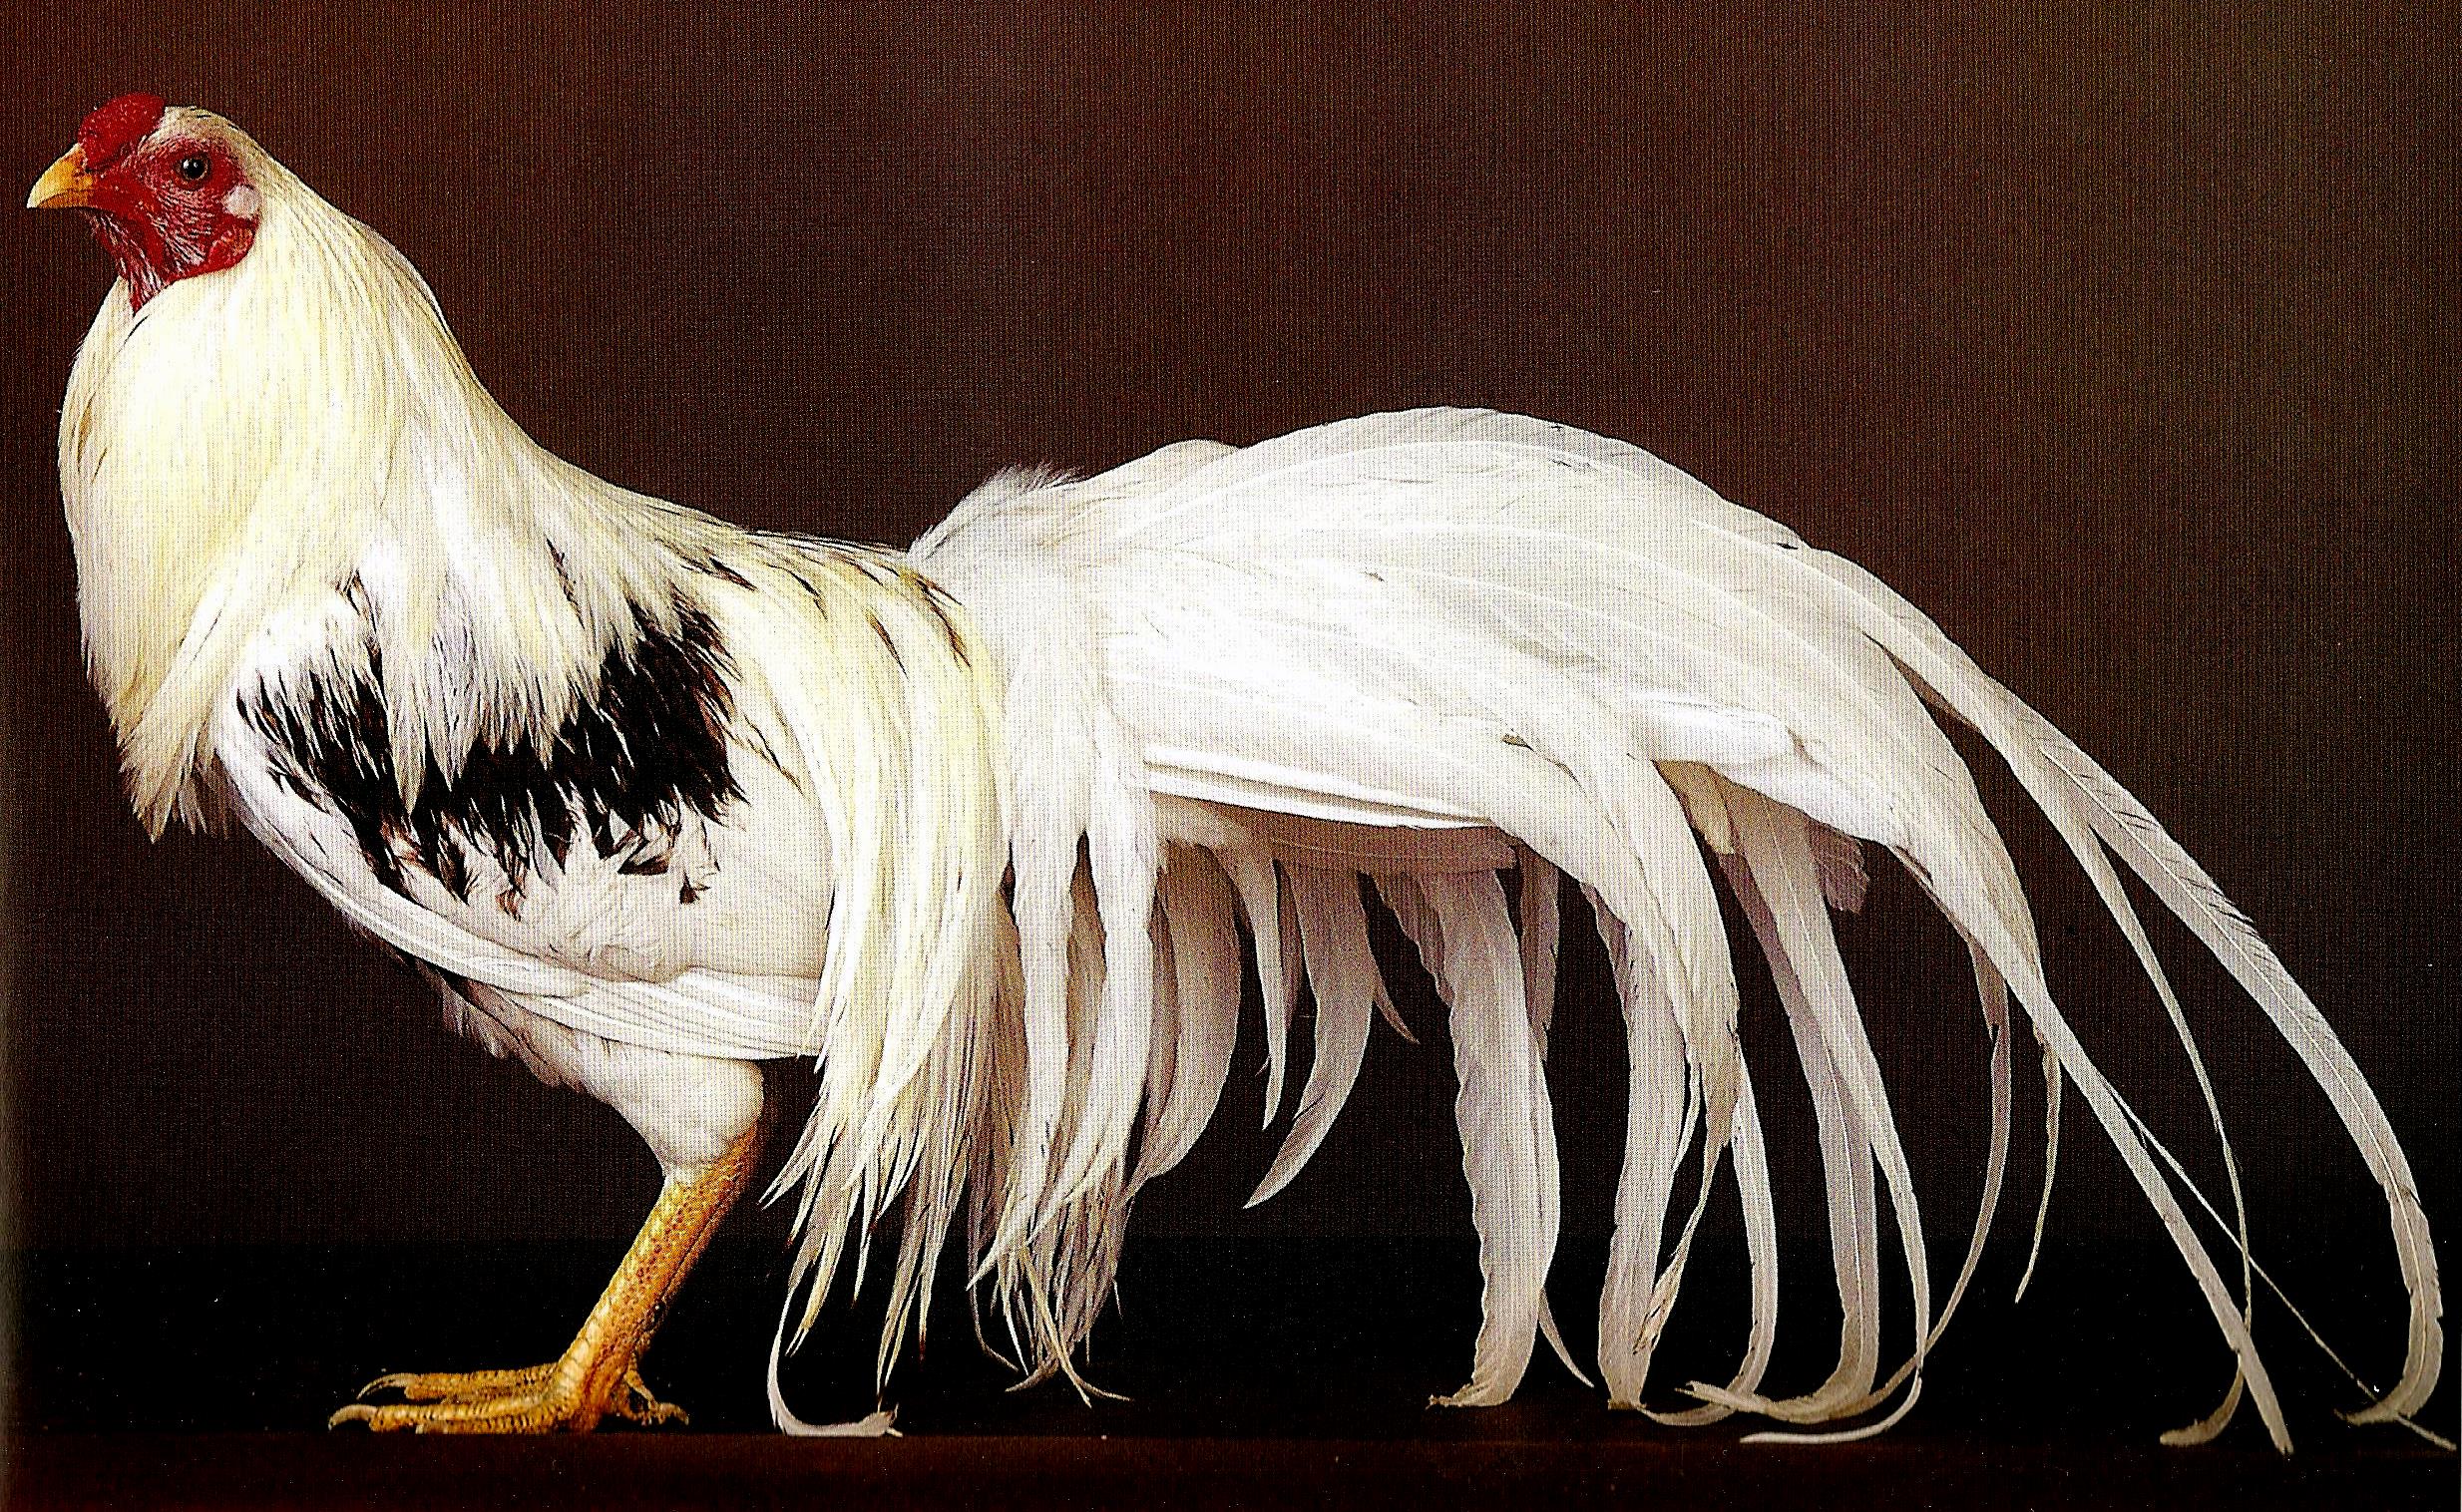 Йокогама порода кур – описание, фото и видео